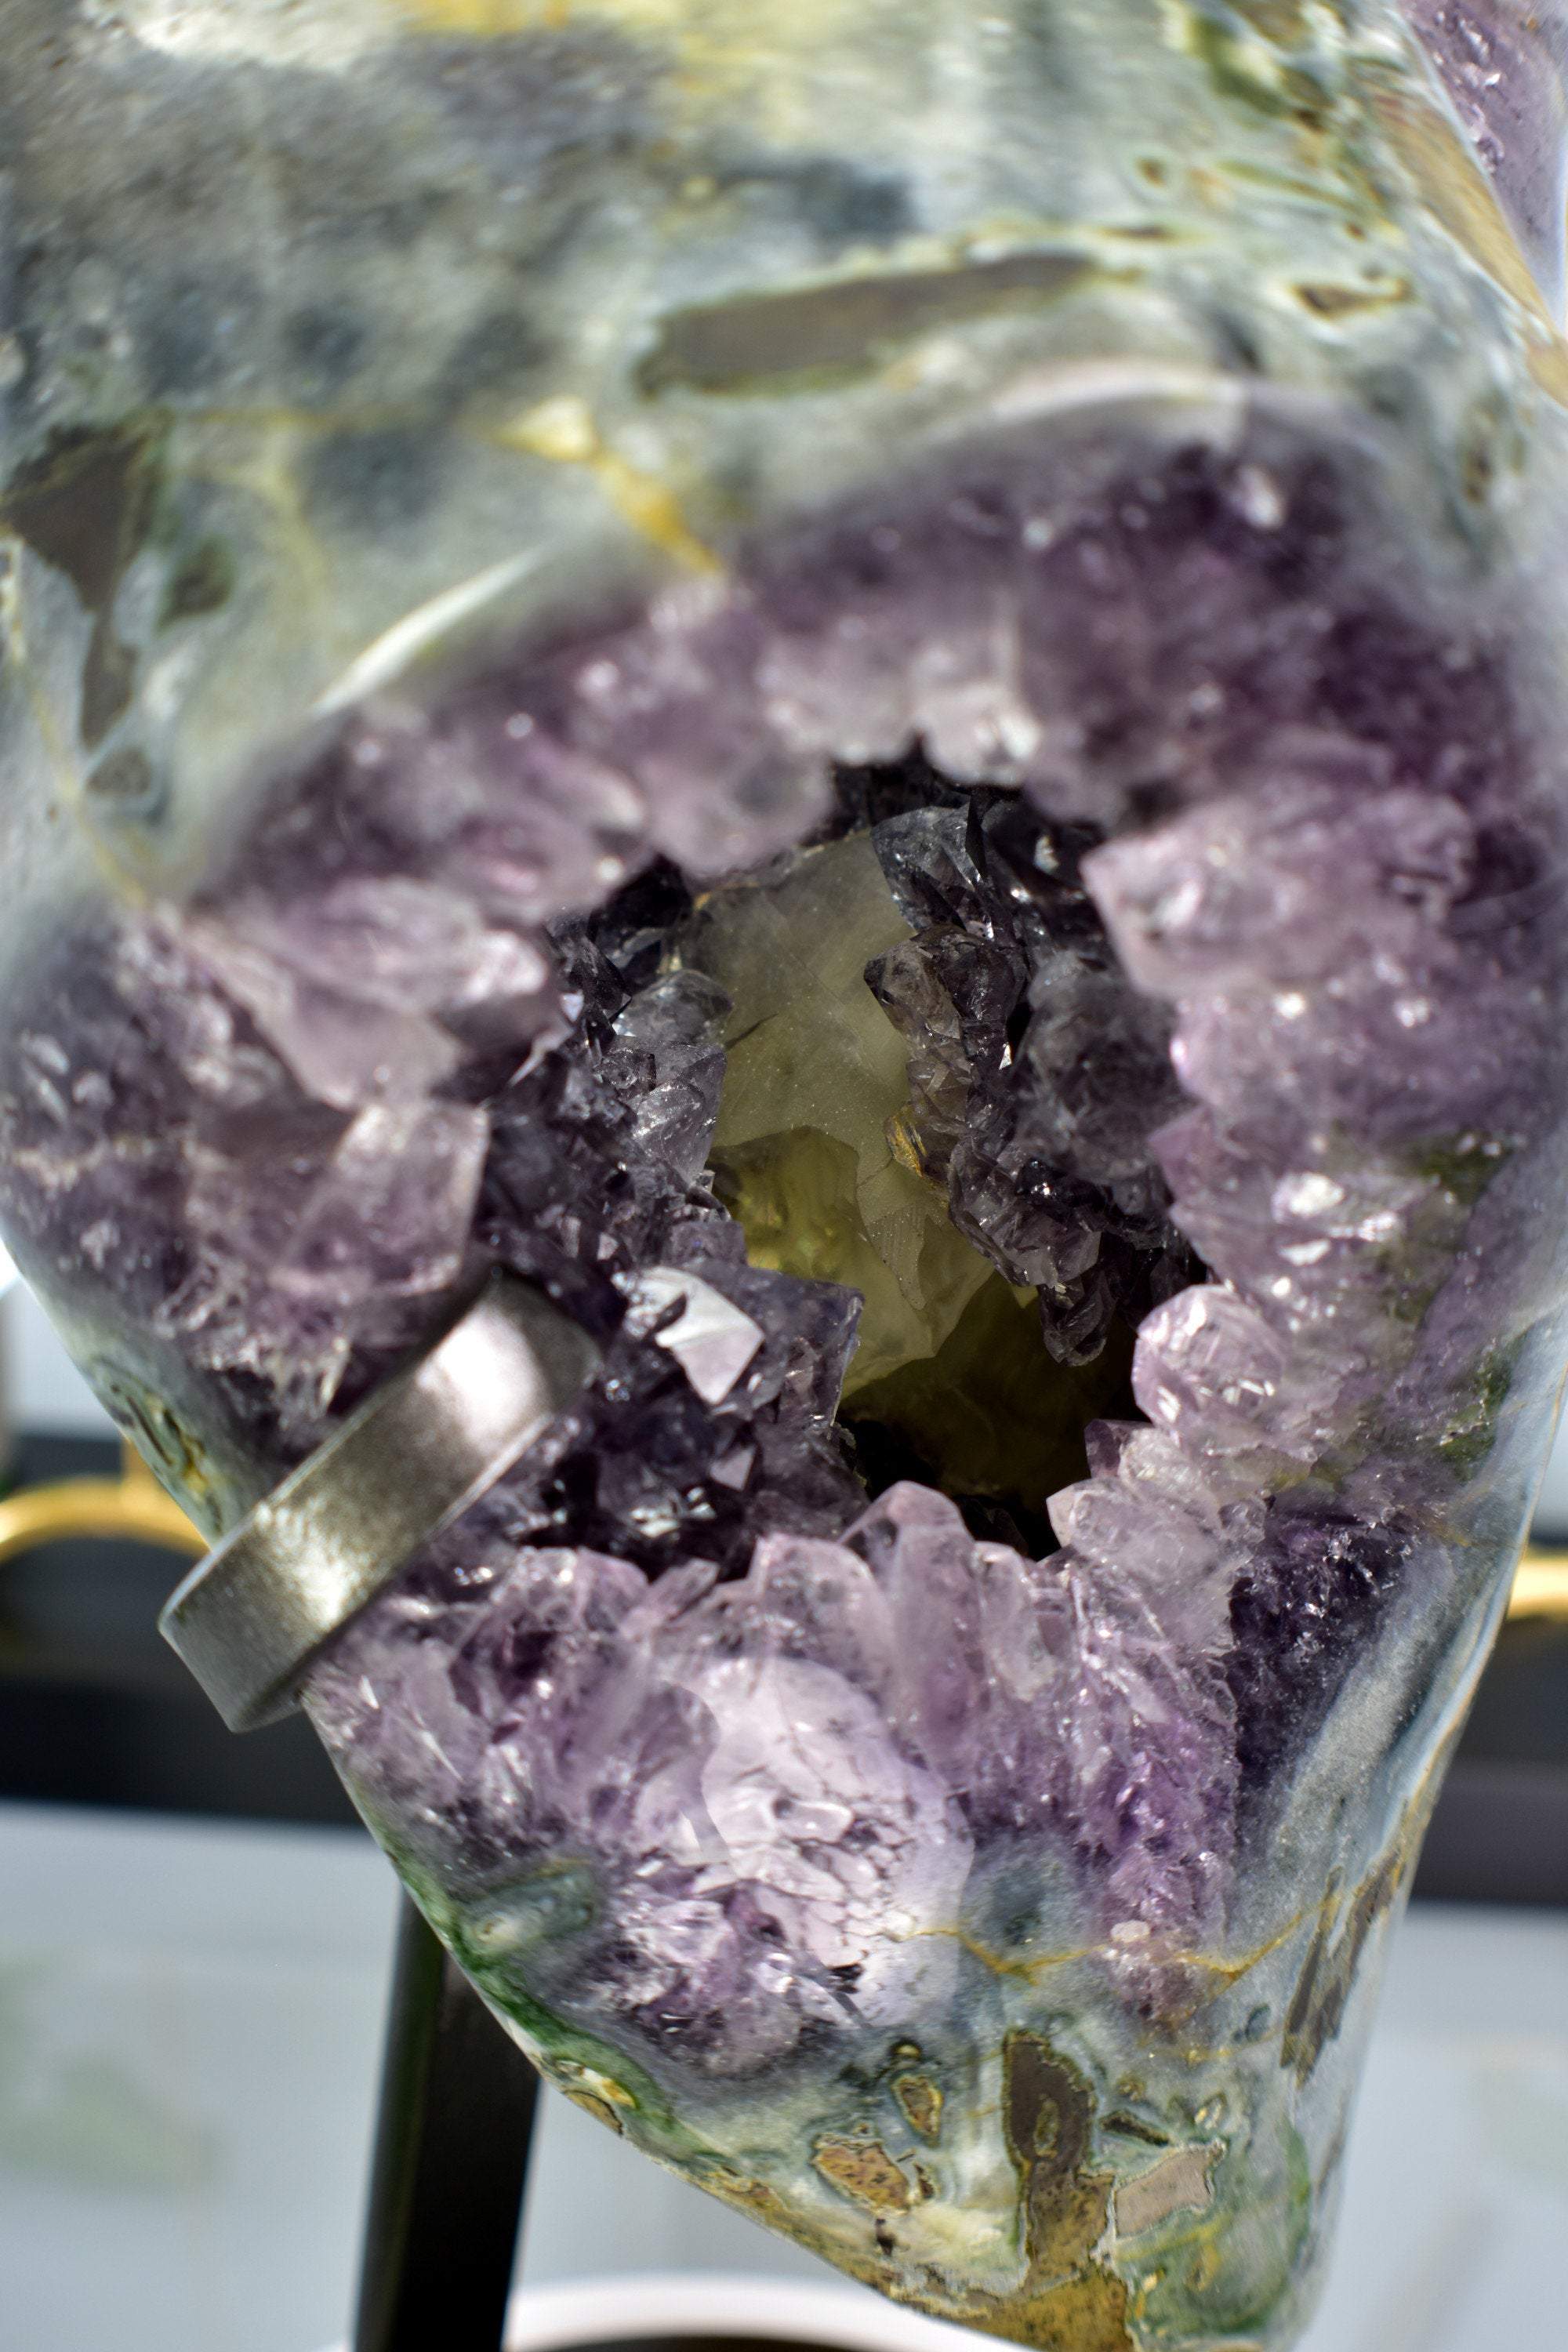 Smoky Amethyst Agate Geode & Formation Home Decor Centerpiece Specimen Crystal Quartz - DelphyCrystals